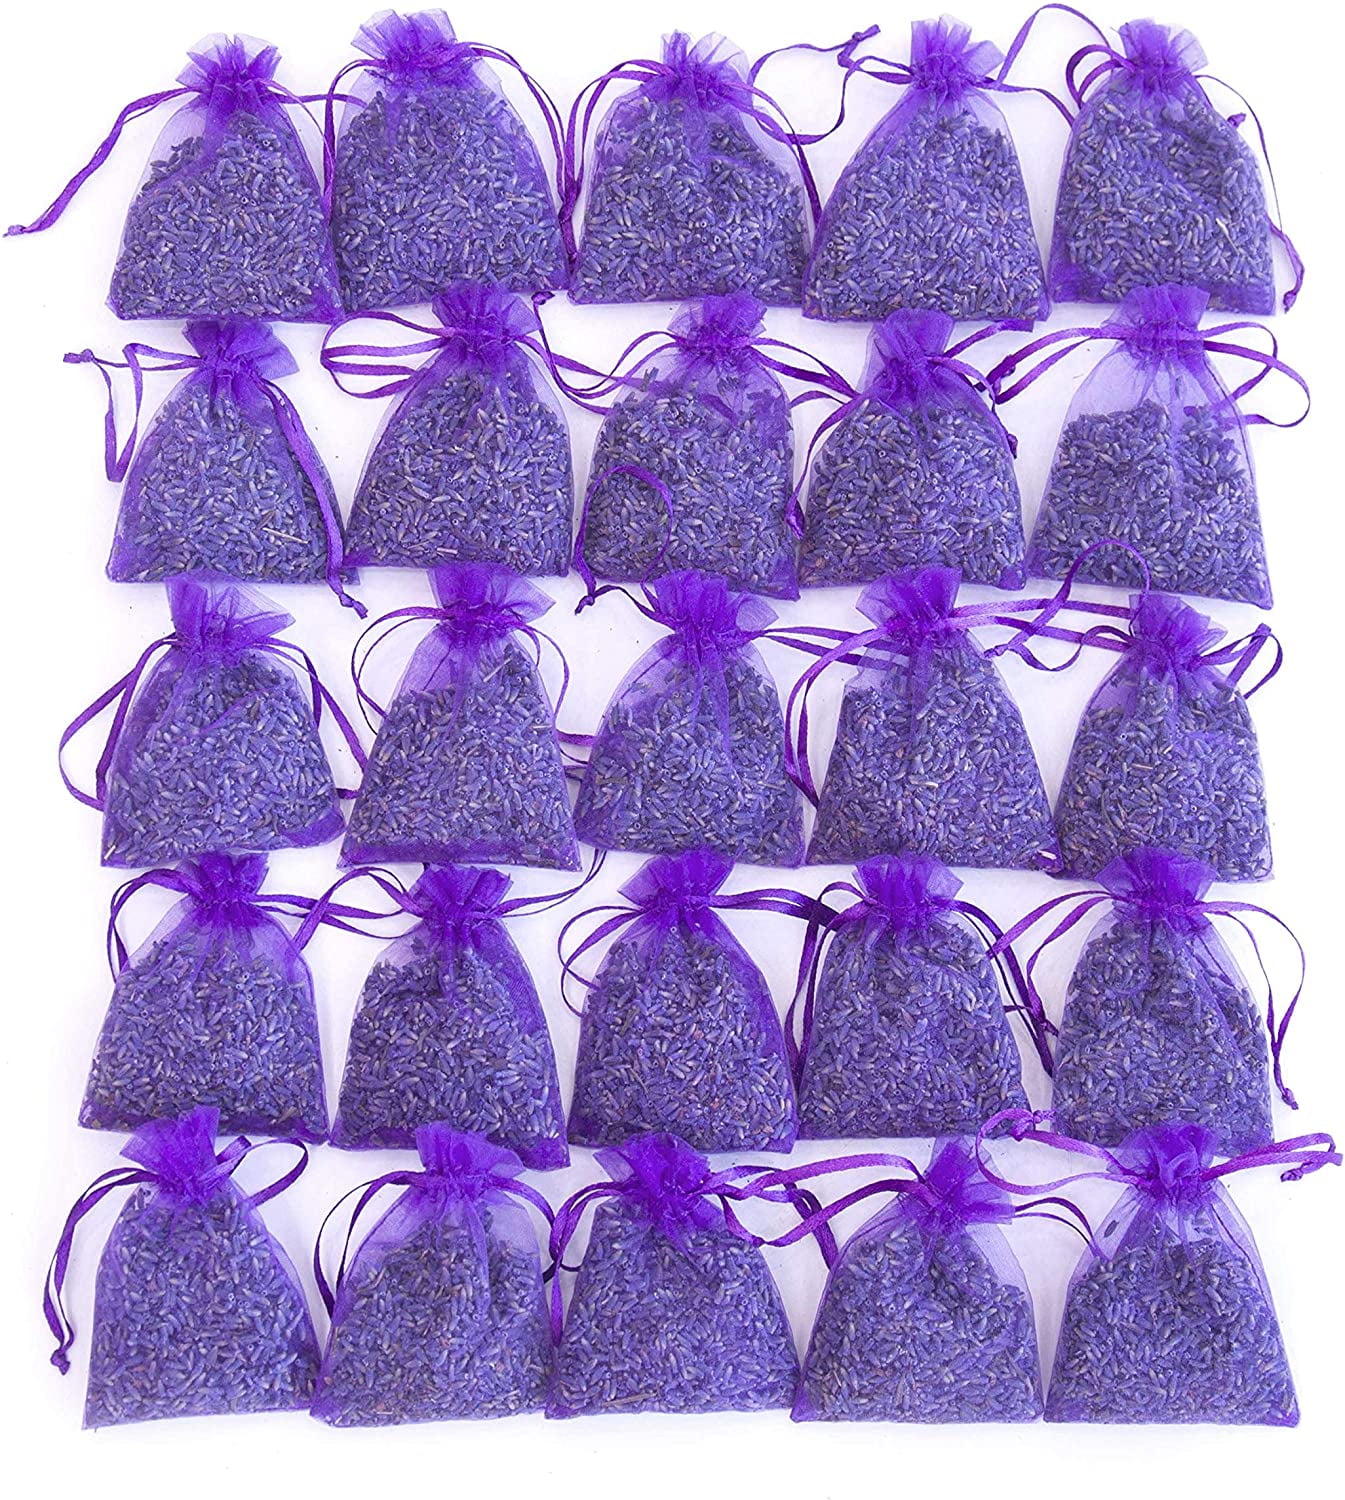 3 Organic Lavender Aromatherapy Sachets Dried Flower Buds Black Bags Potpourri 